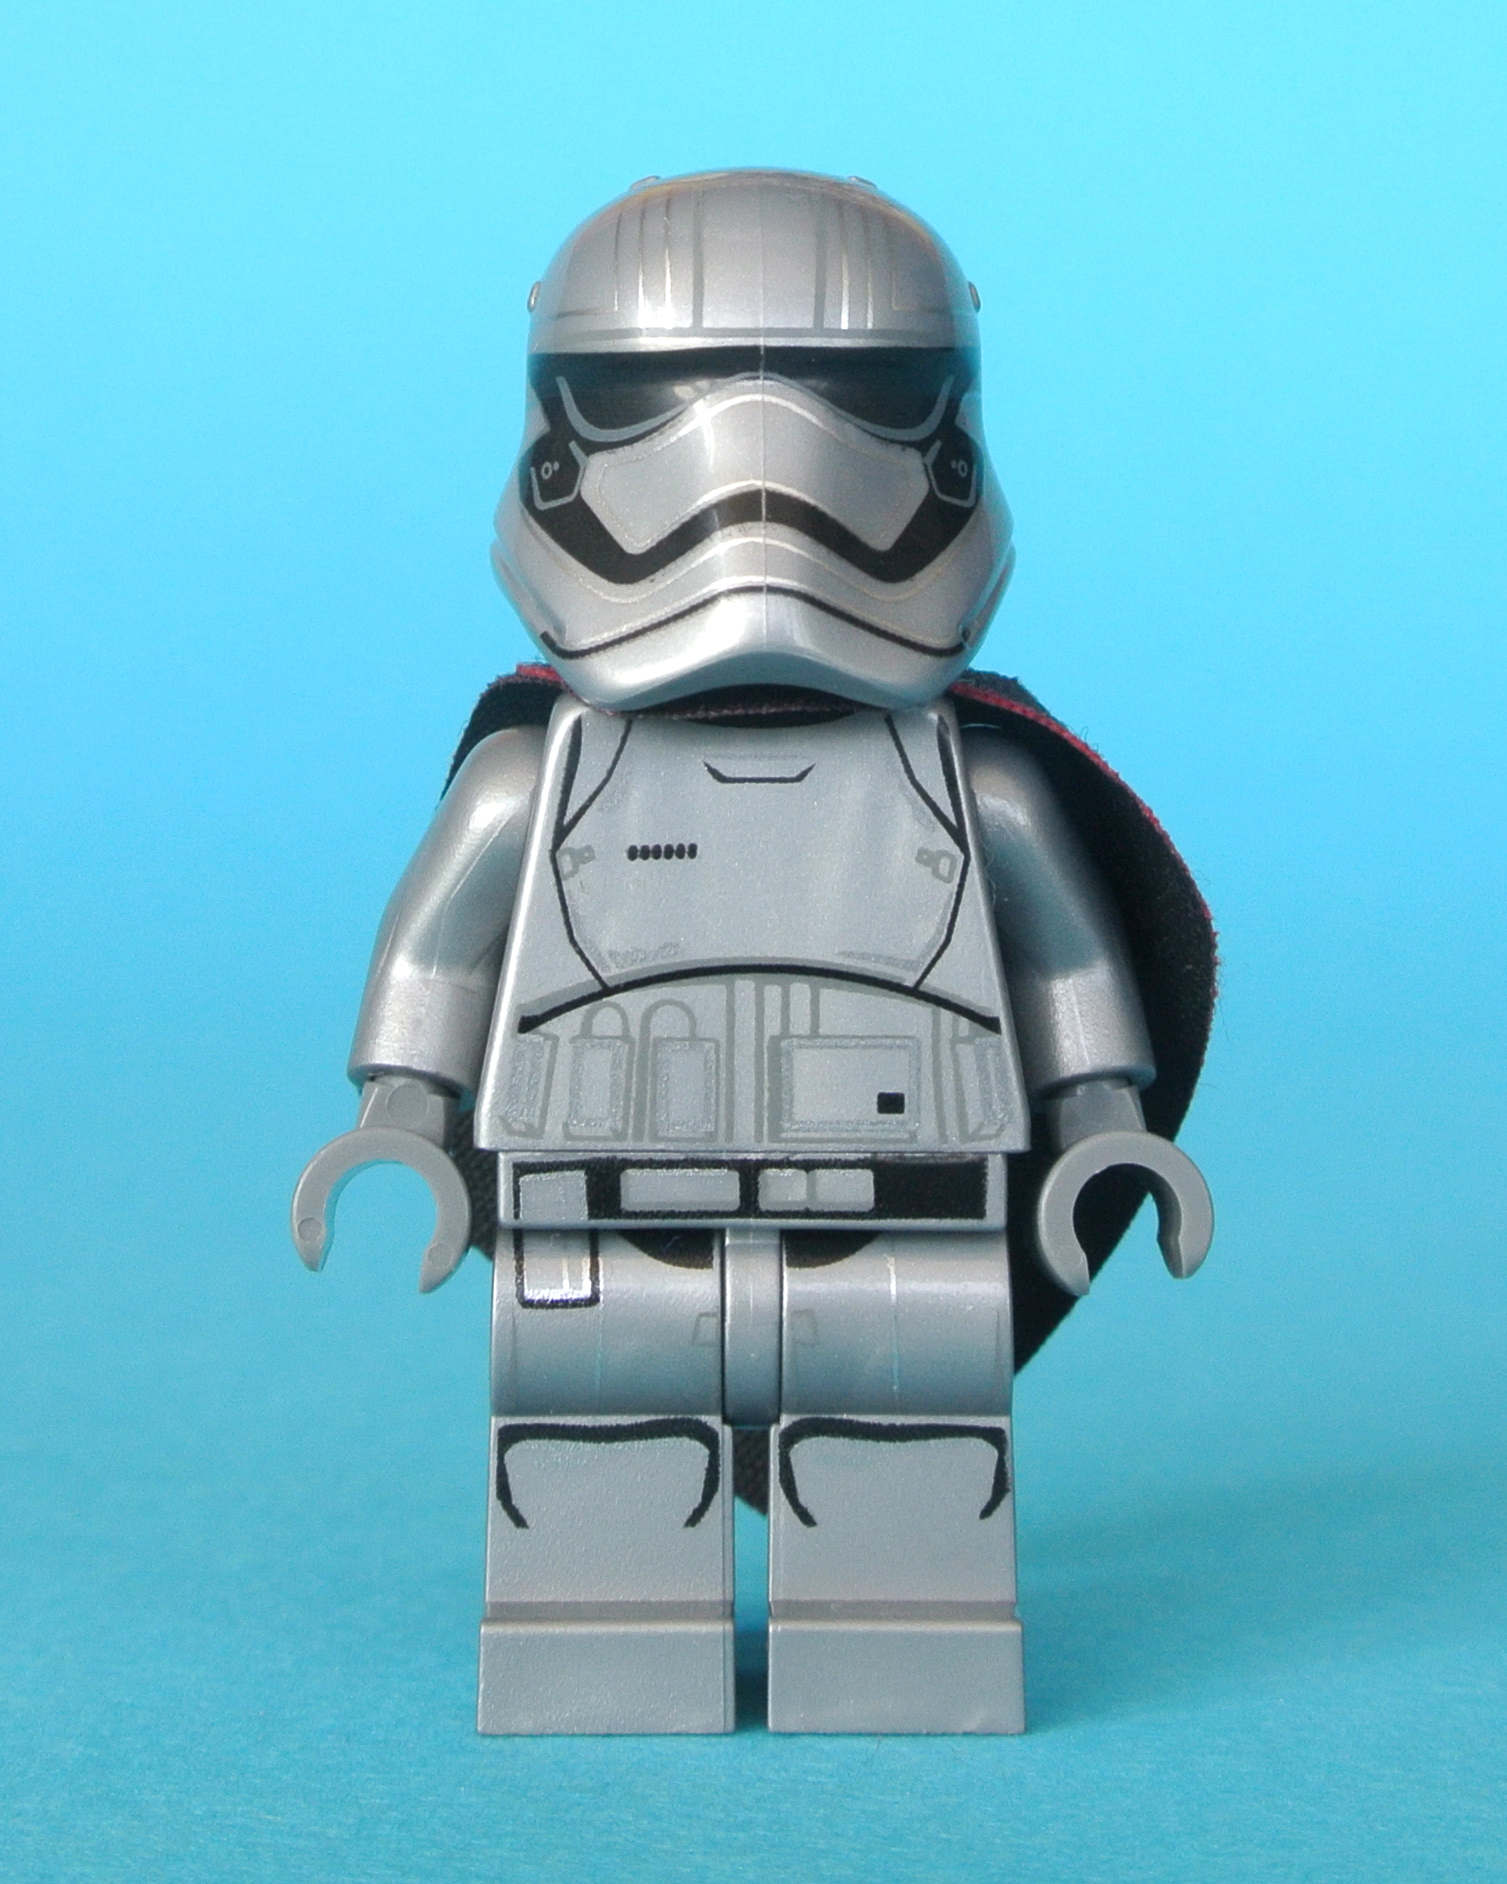 a toy lego boba fett helmet and gray suit